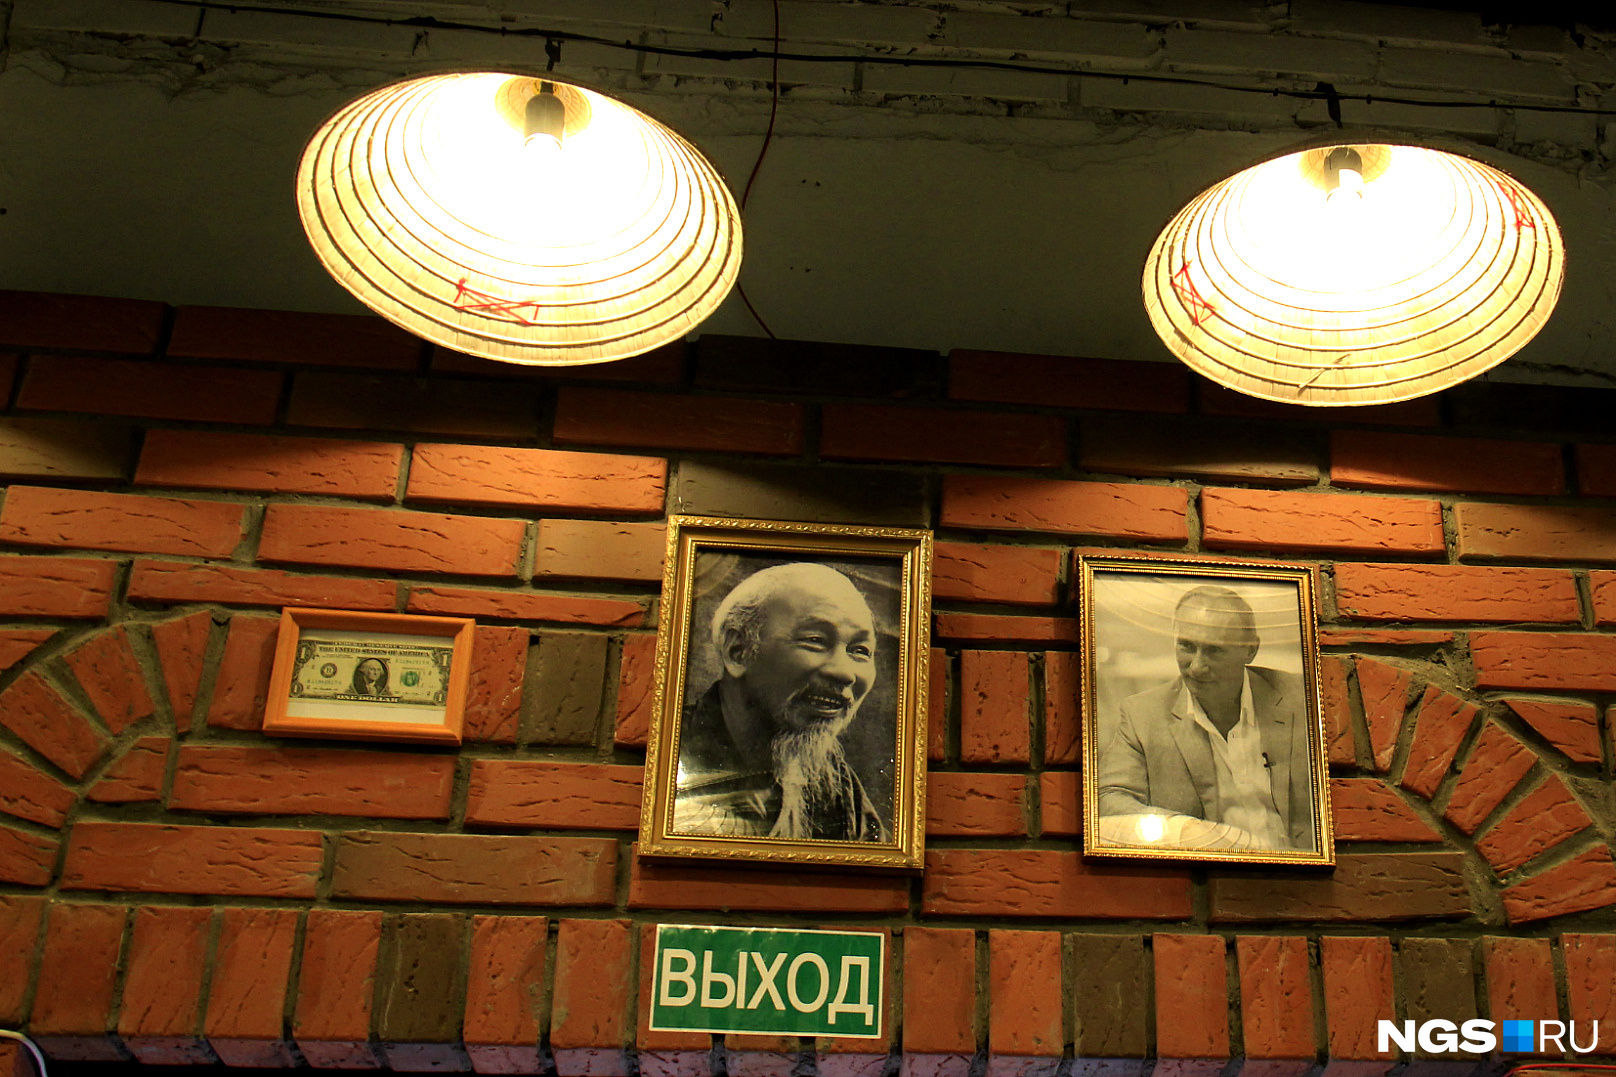 Над входом висят портреты Владимира Путина, Хо Ши Мина и Джорджа Вашингтона